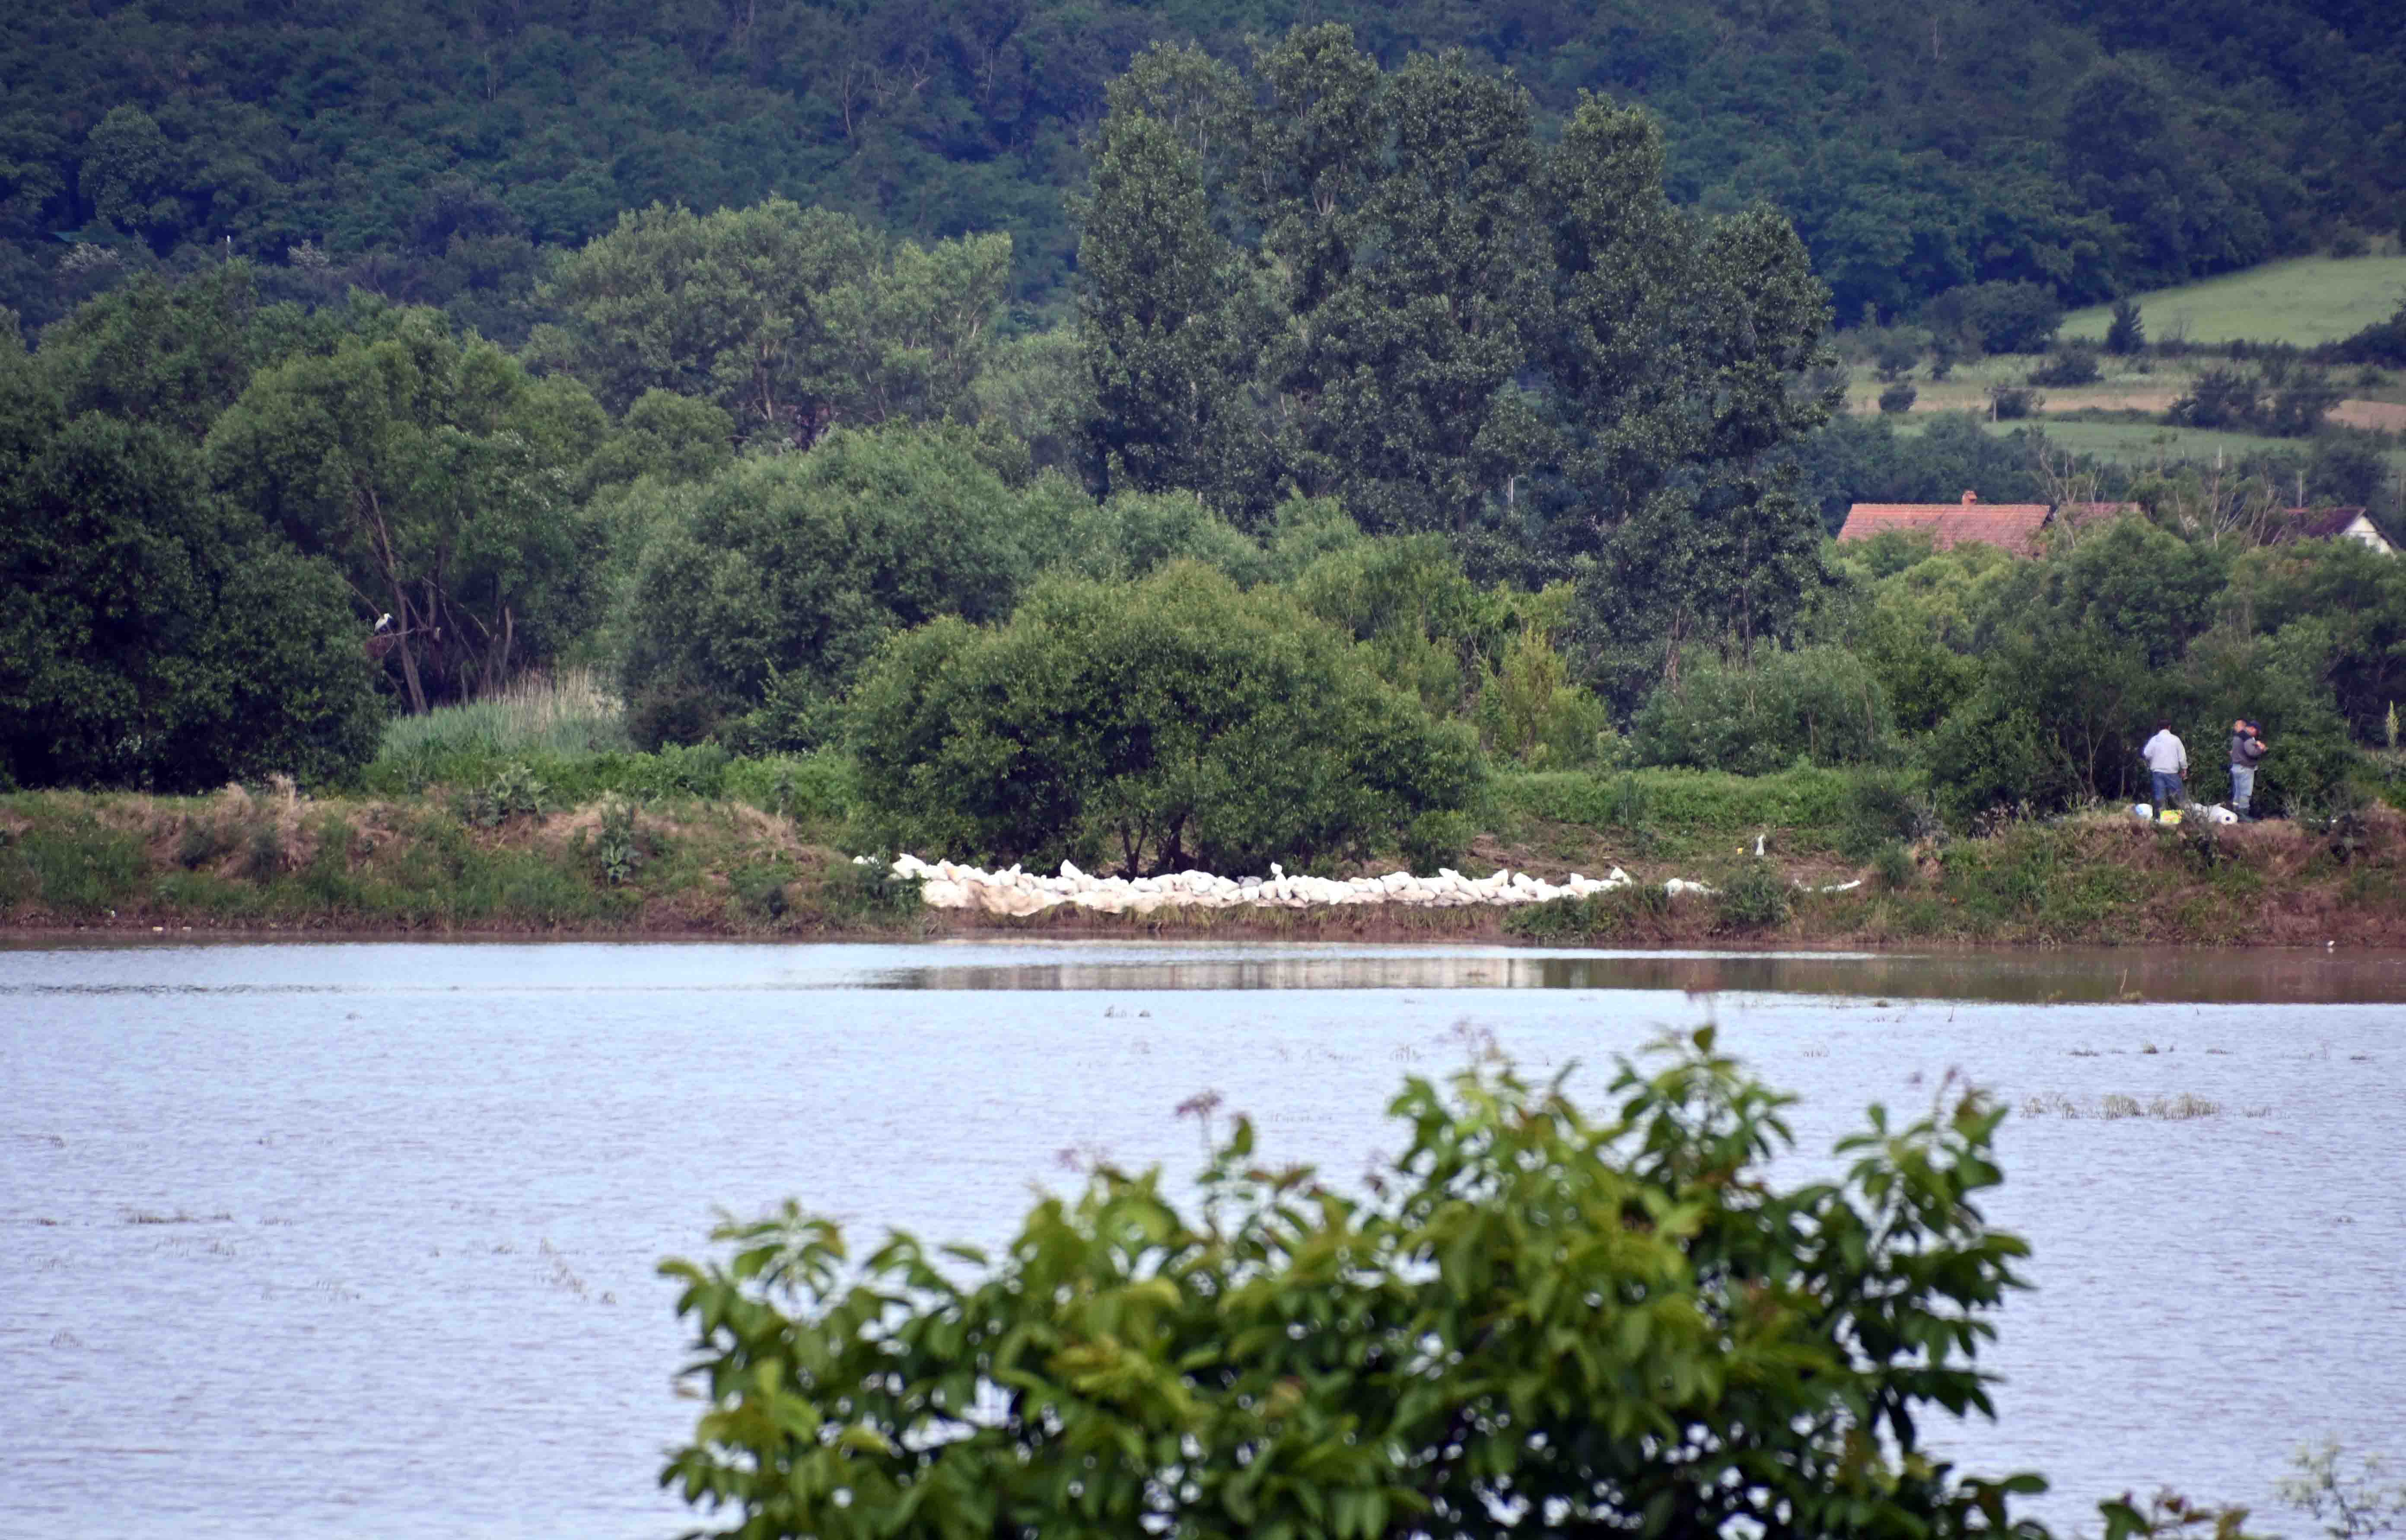  Ministar Gašić obišao poplavlјenu industrijsku zonu u Jagodini